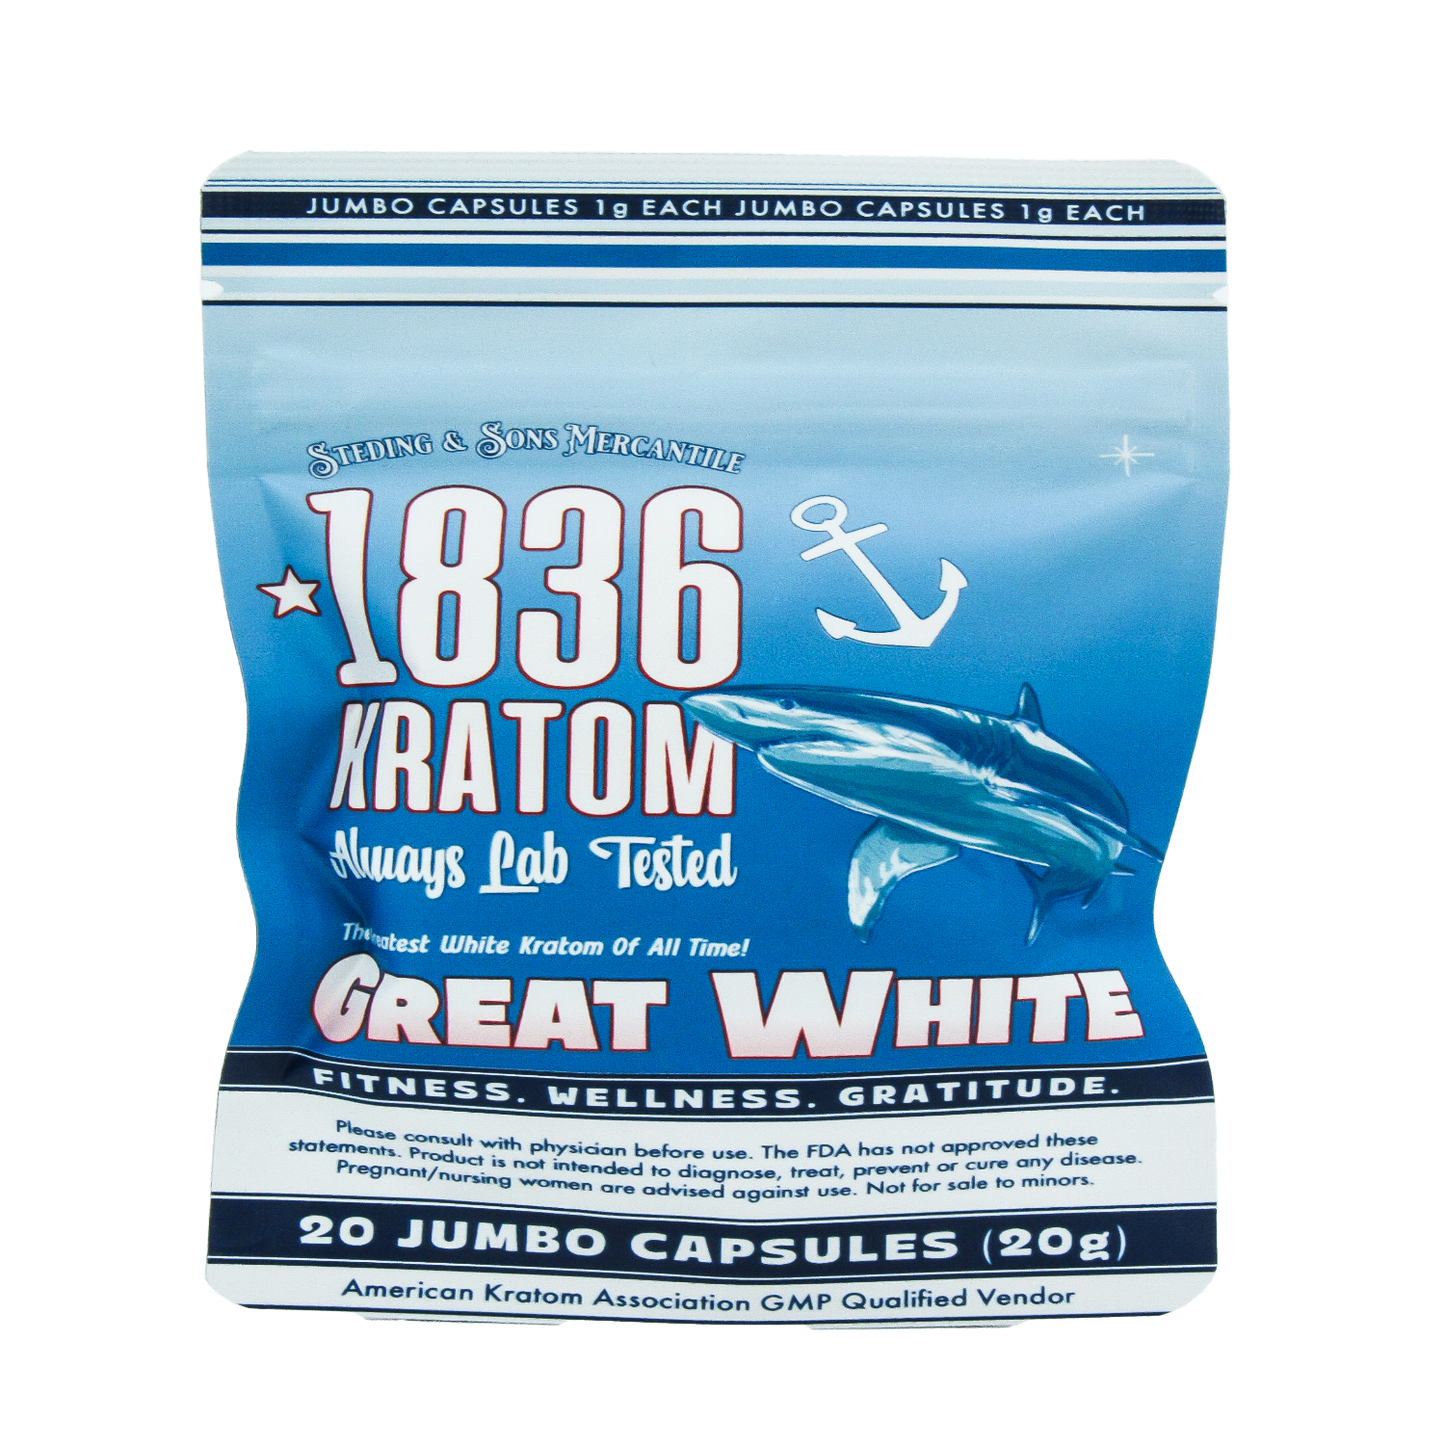 1836 Kratom Capsules - Great White